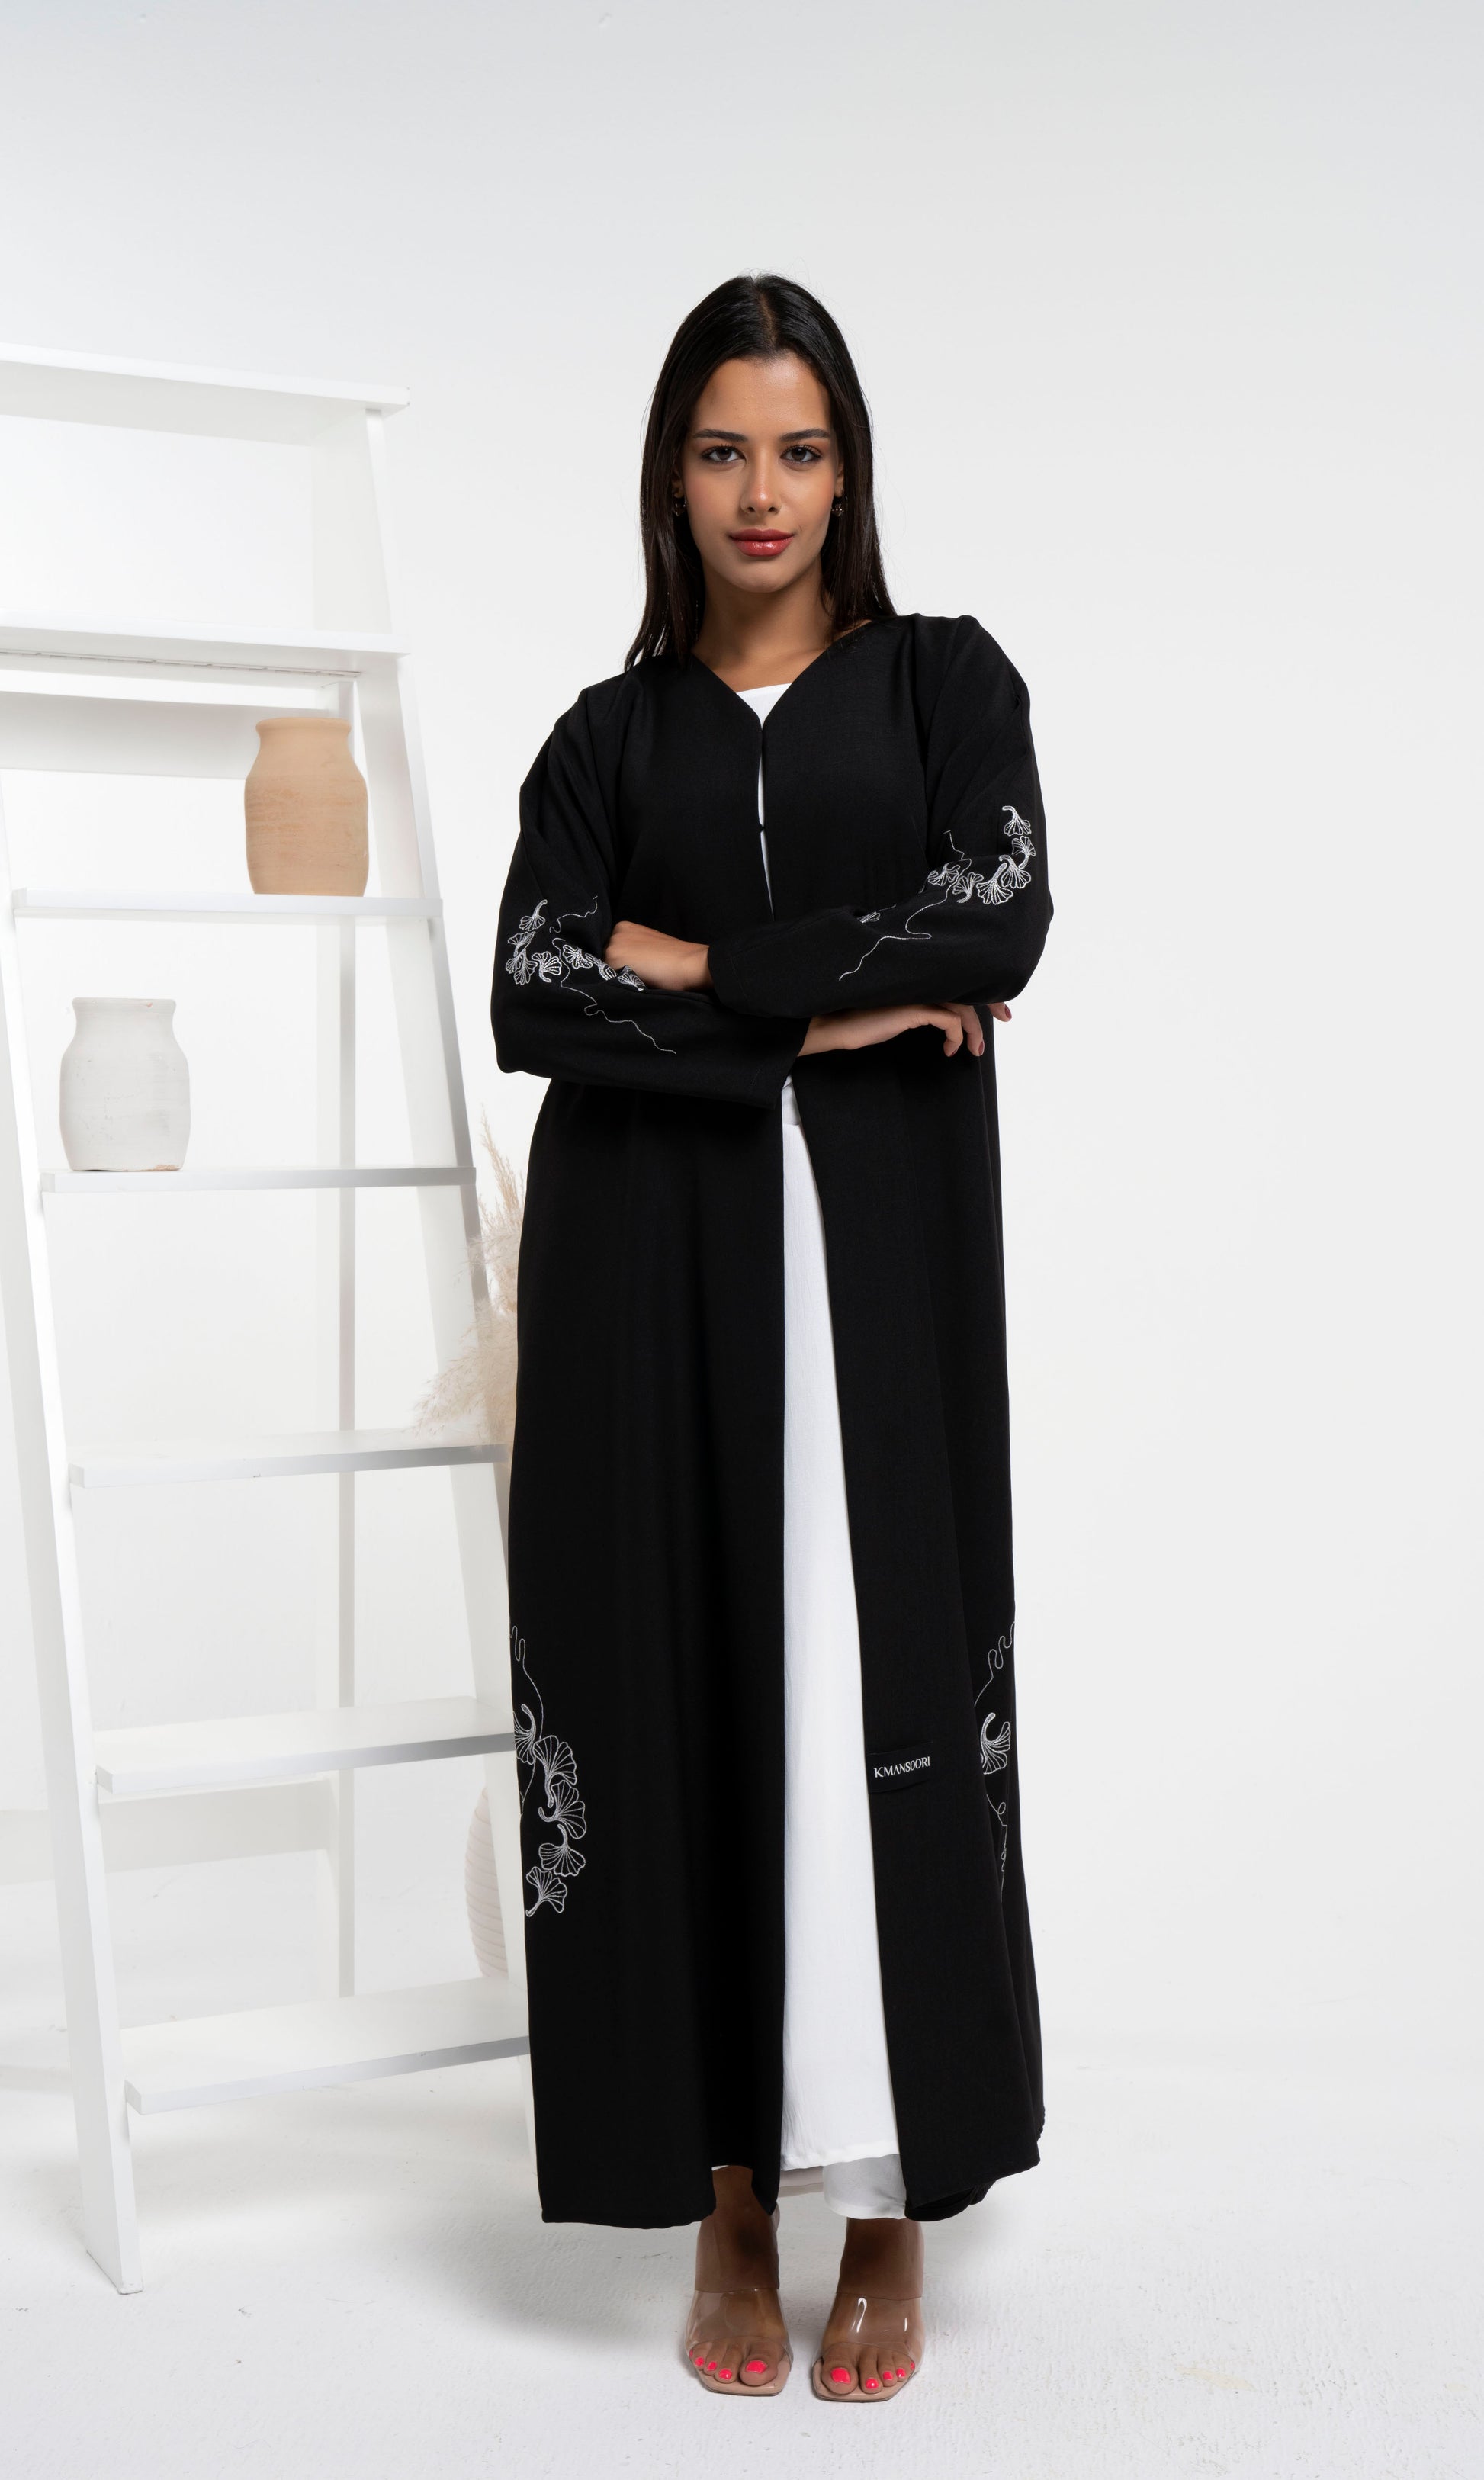 Black abaya for sale in Dubai